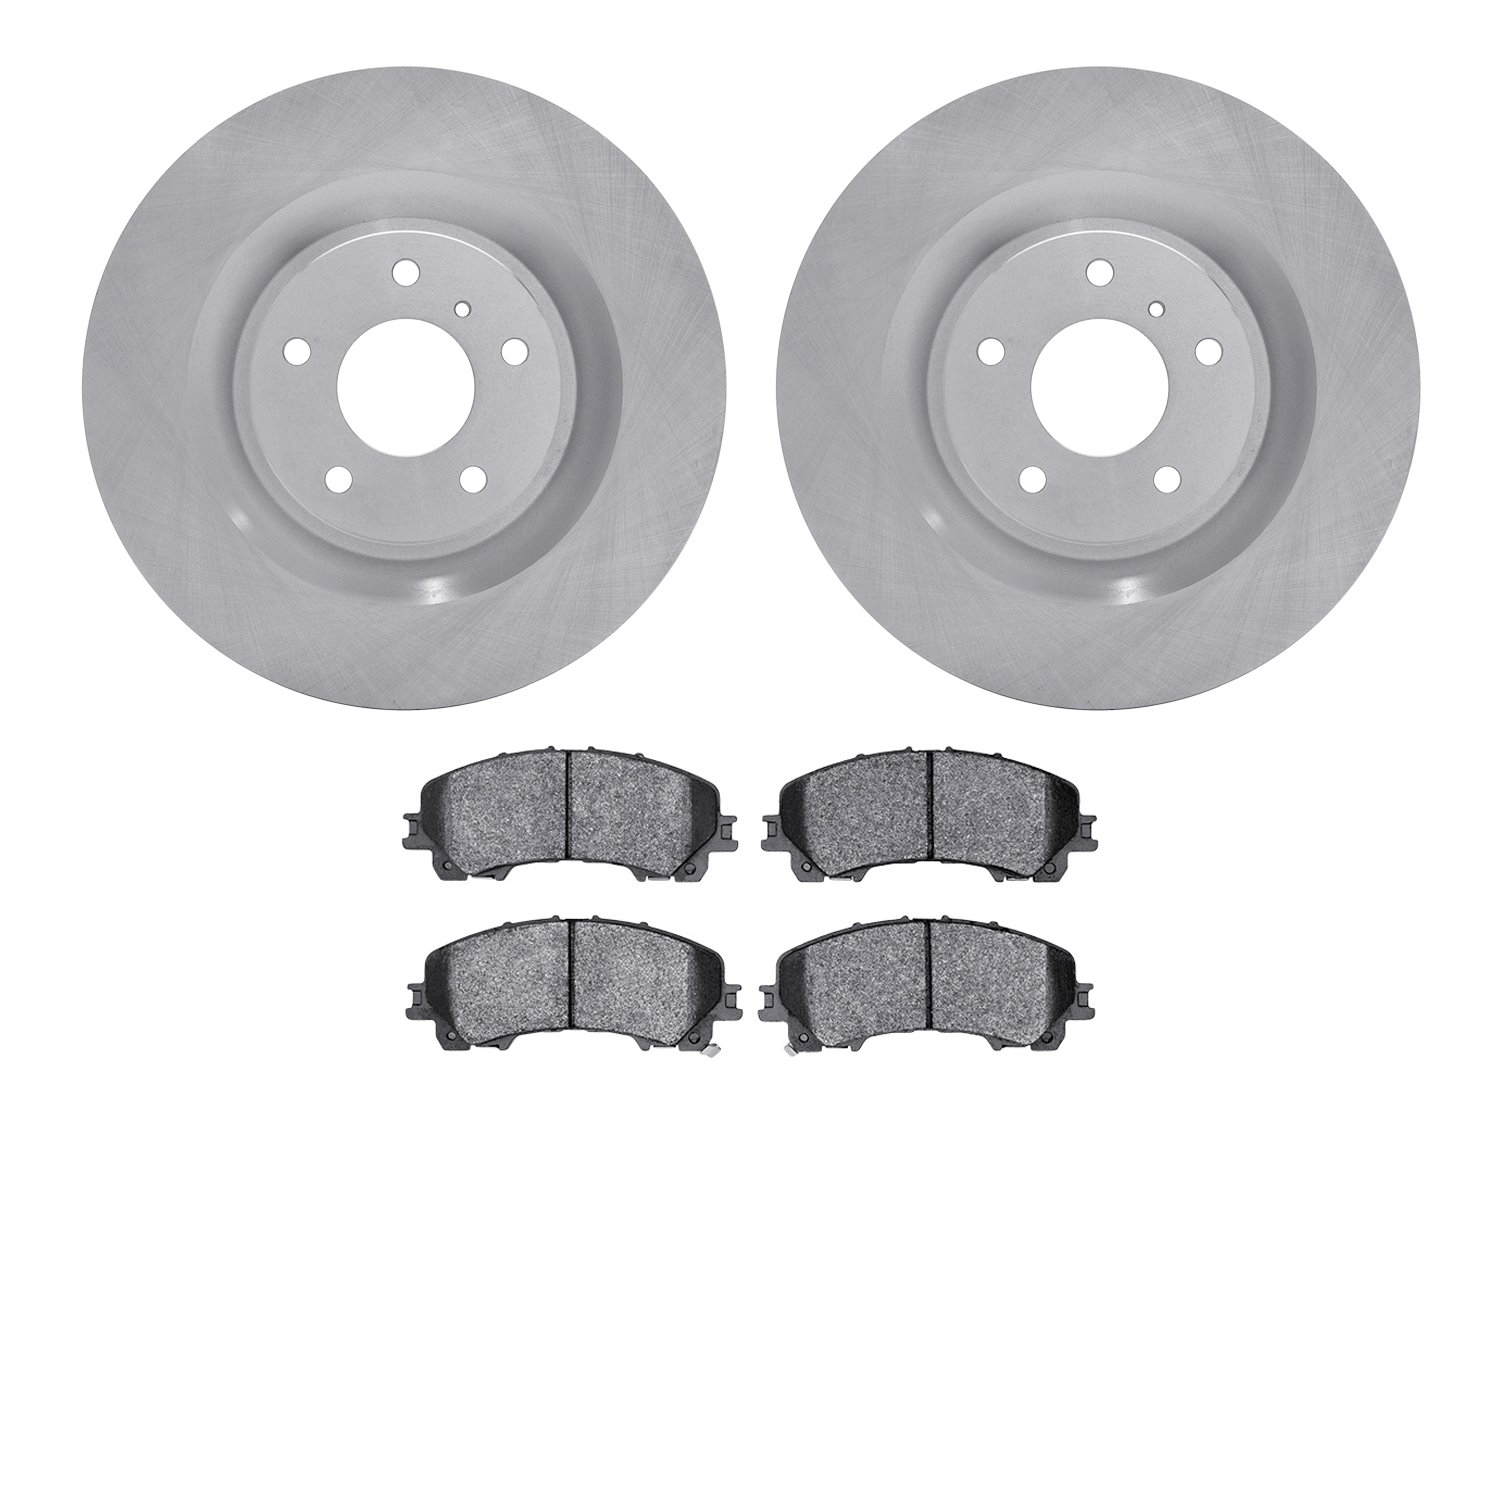 6302-68002 Brake Rotors with 3000-Series Ceramic Brake Pads Kit, Fits Select Infiniti/Nissan, Position: Front